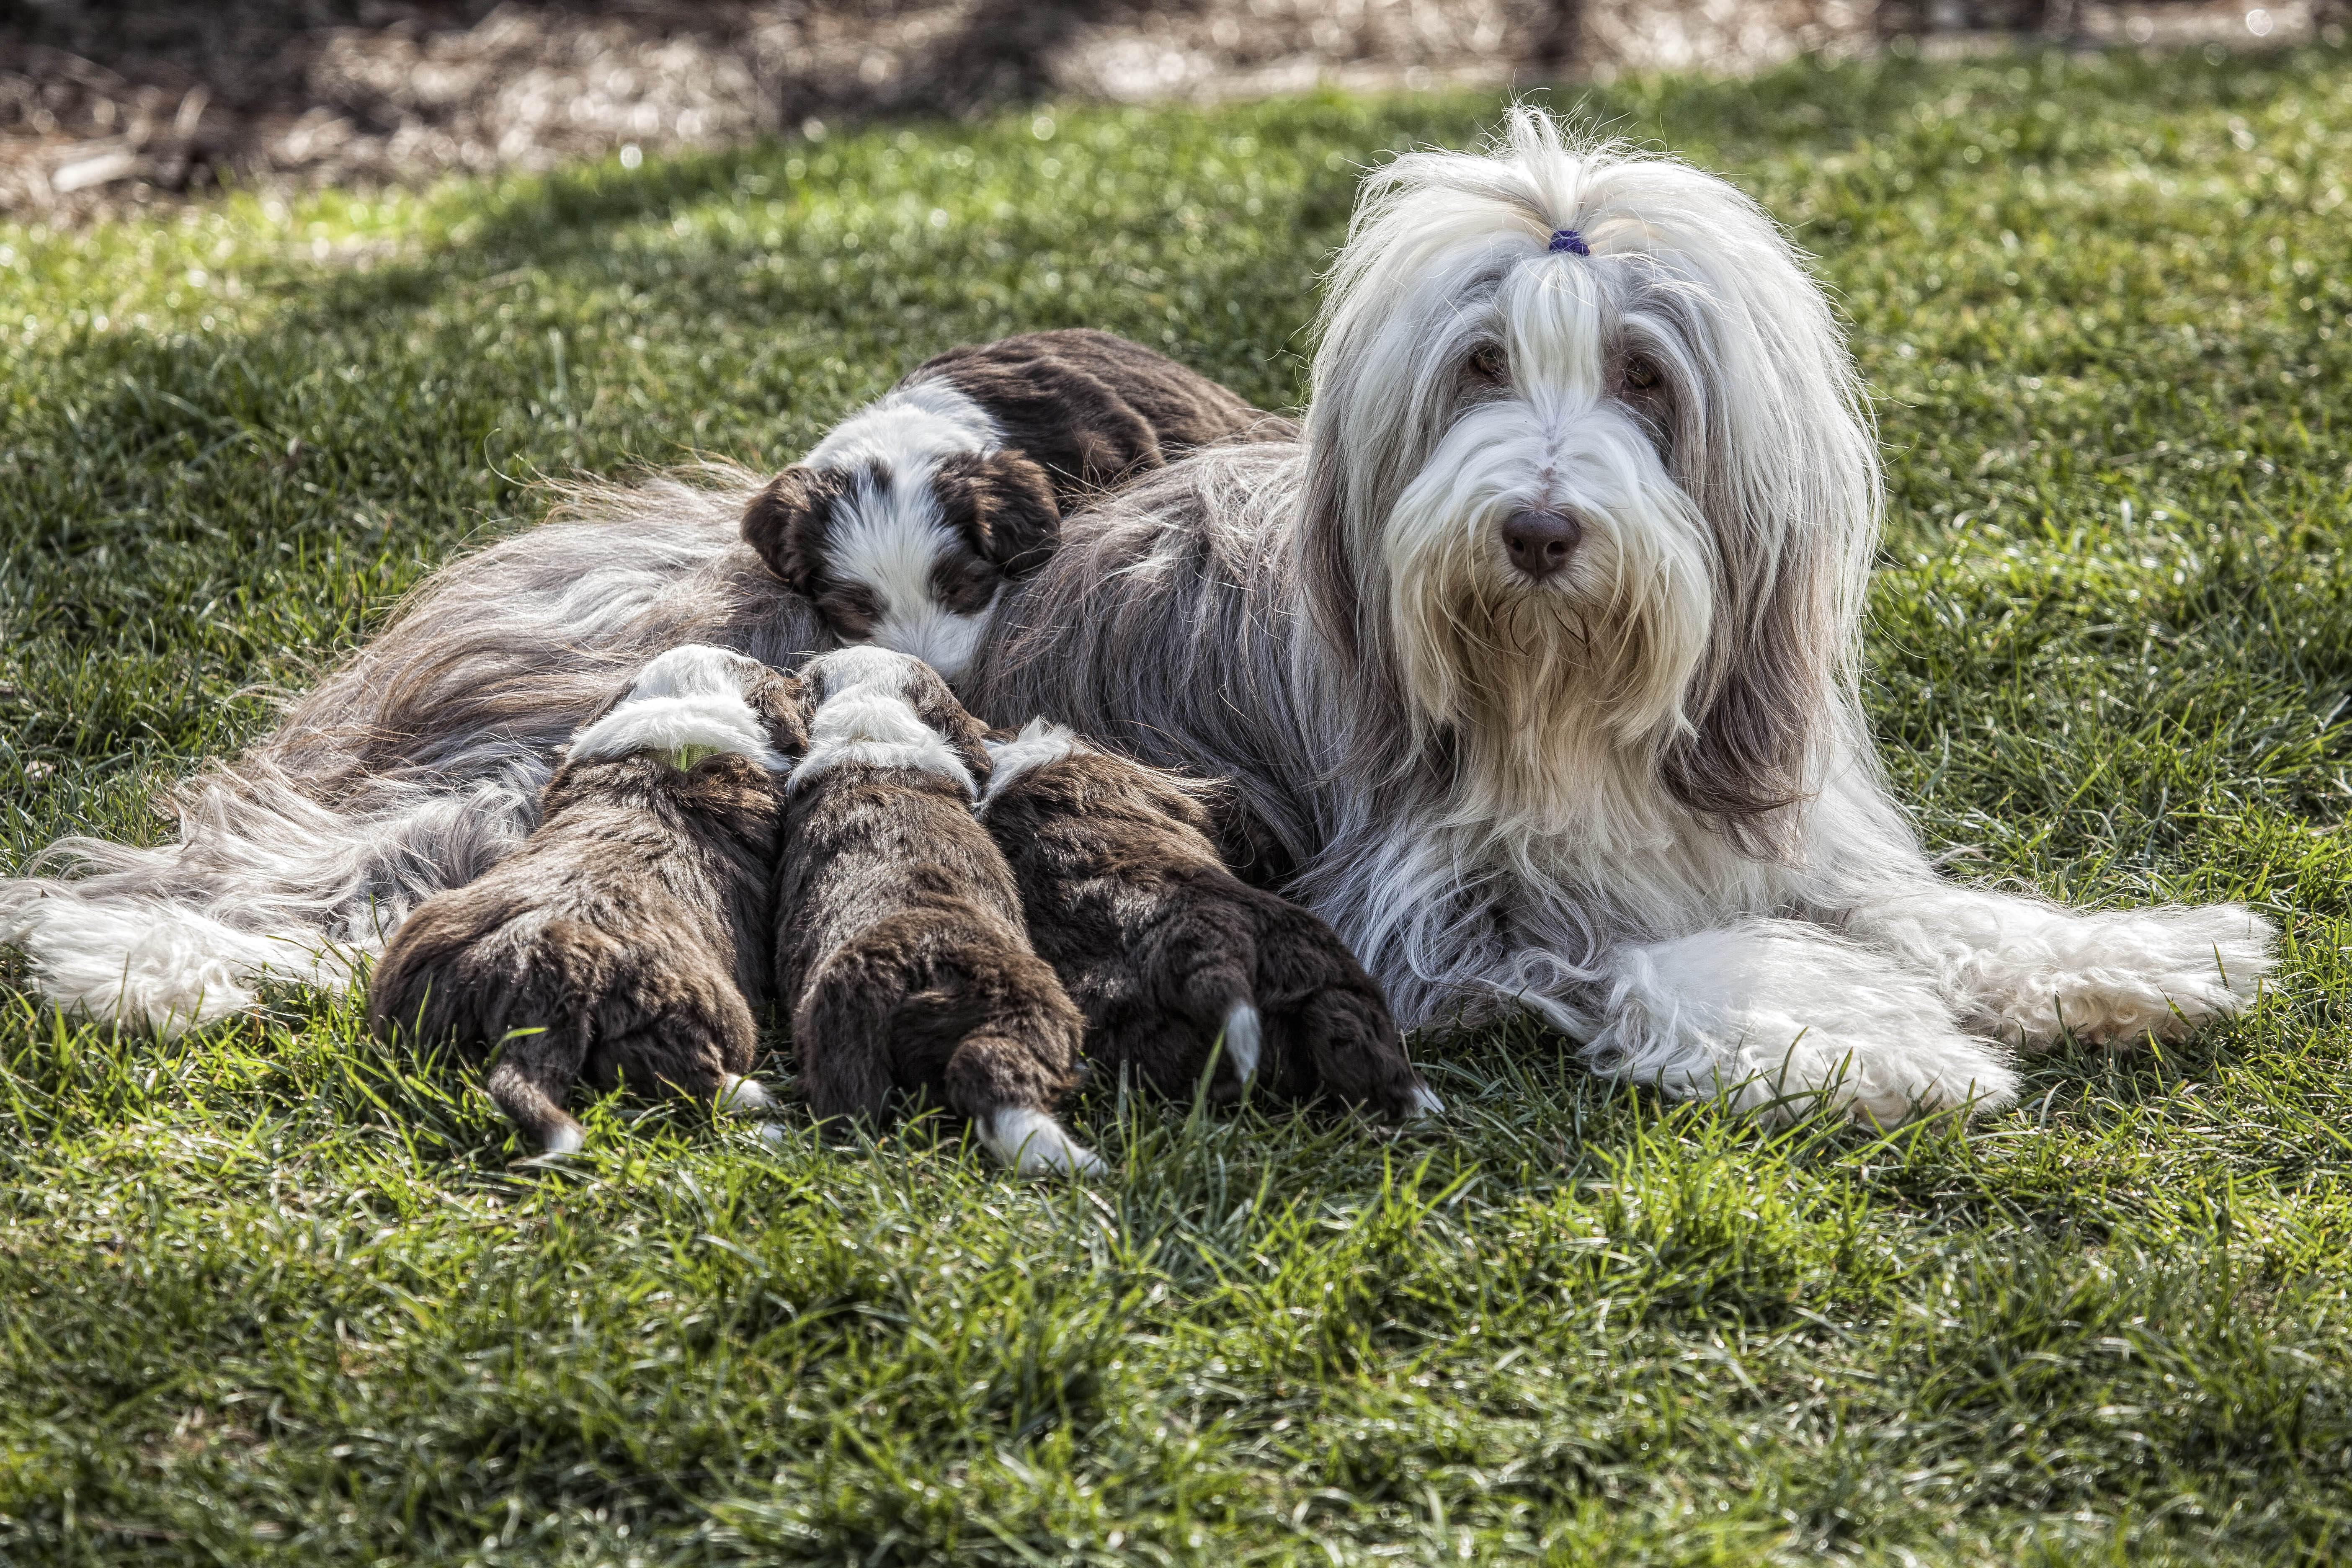 Бородатый колли (биардид, бирди): описание породы собак с фото и видео